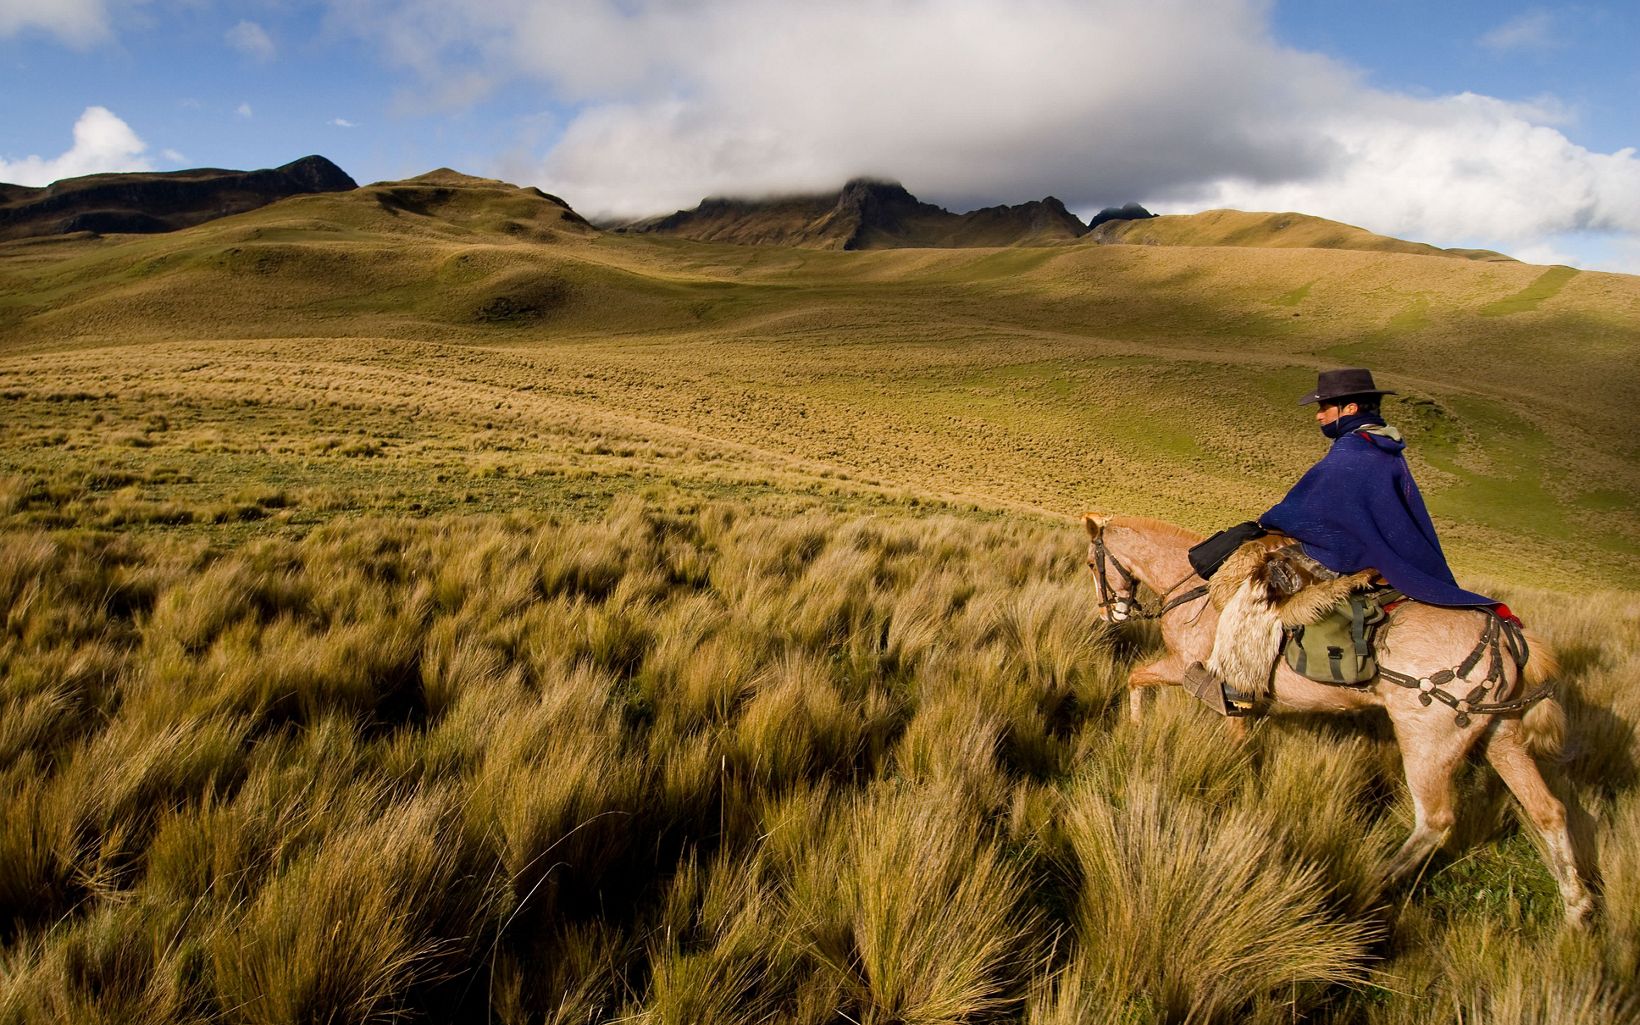 A farmer rides a horse on Andean highlands